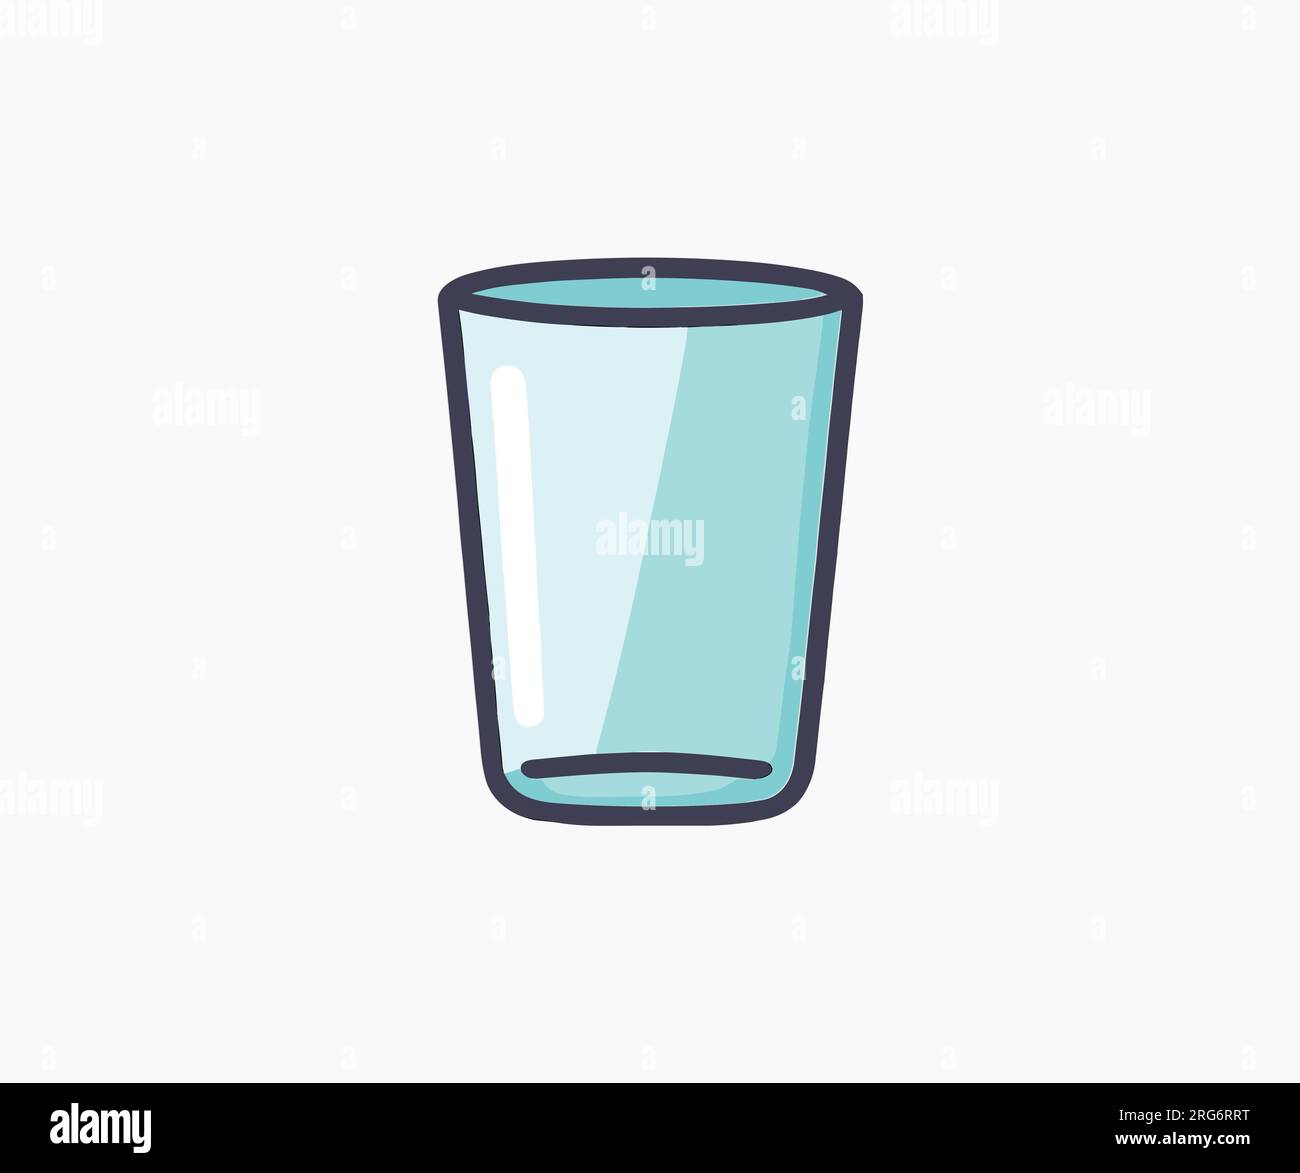 https://c8.alamy.com/comp/2RG6RRT/flat-vector-illustration-of-a-glass-of-water-2RG6RRT.jpg